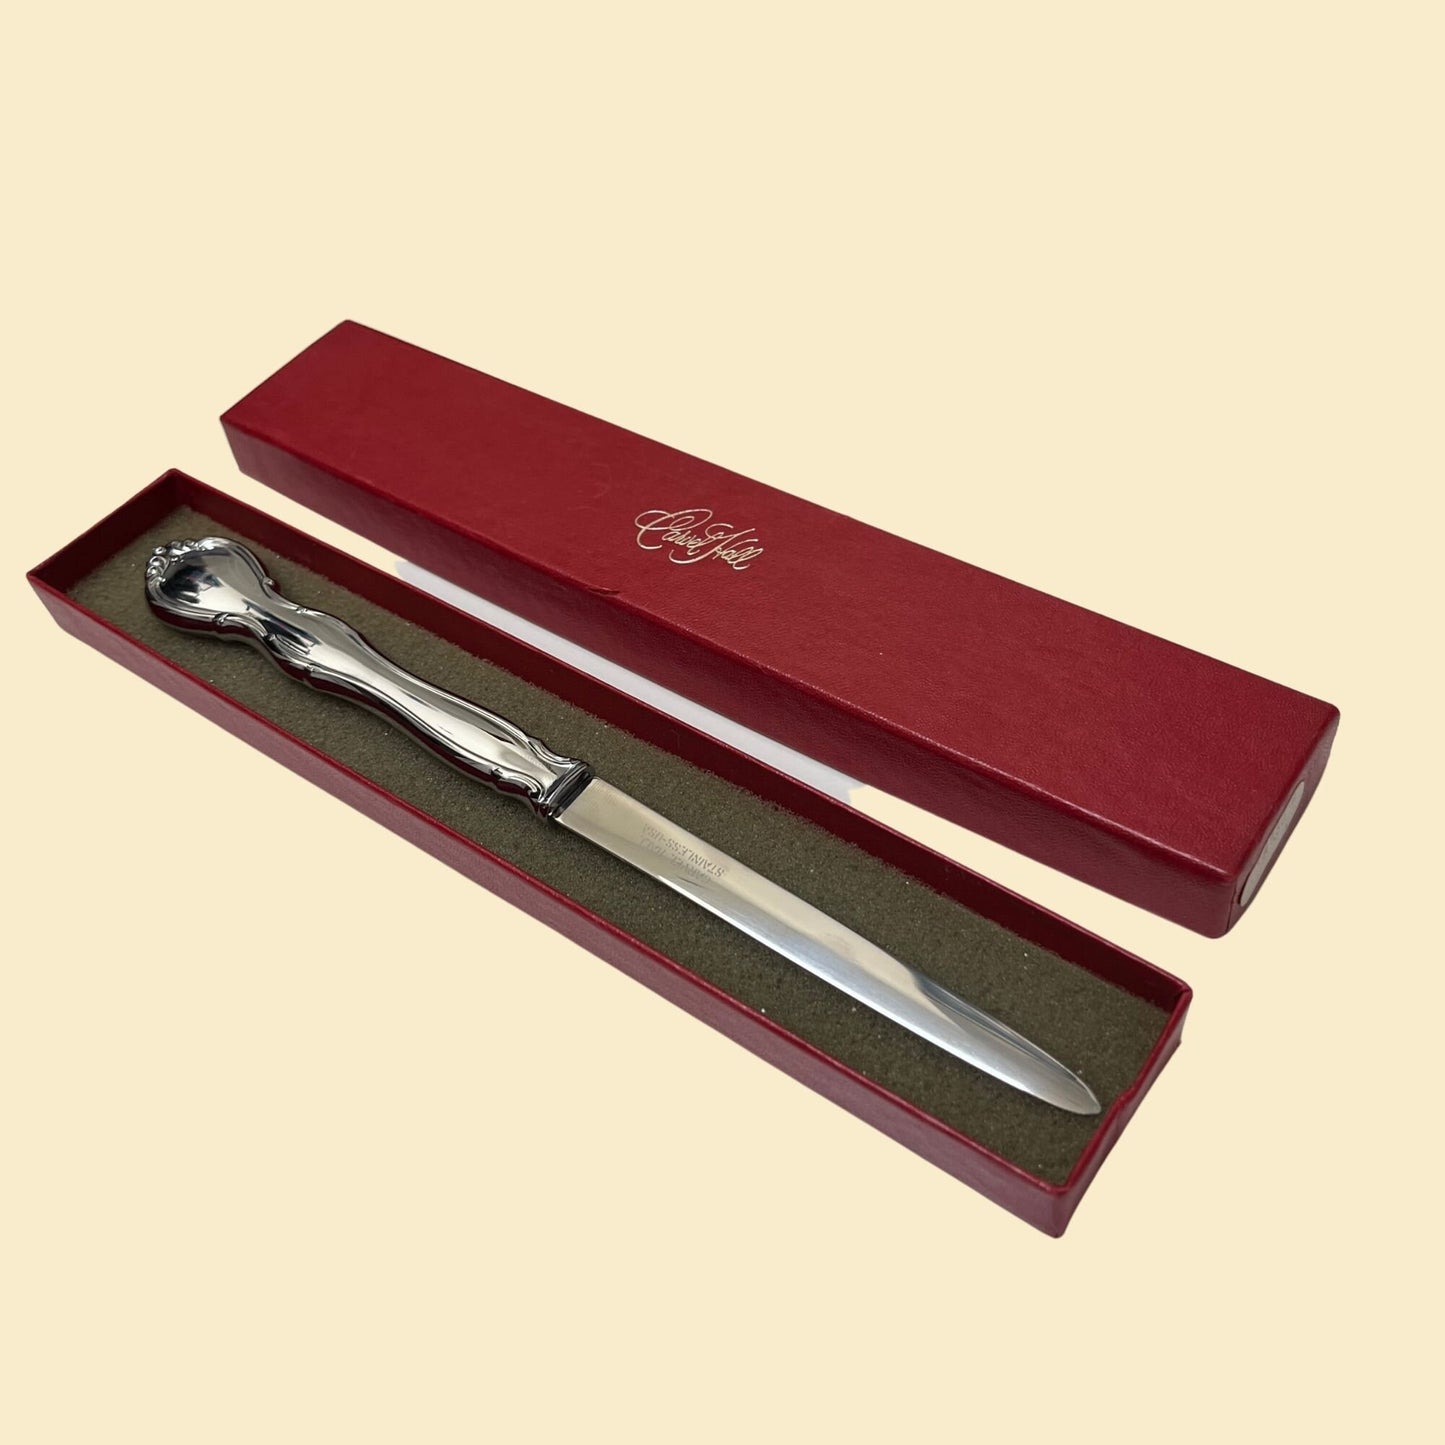 Vintage Carvel Hall letter opener in stainless steel, 8" letter opening knife